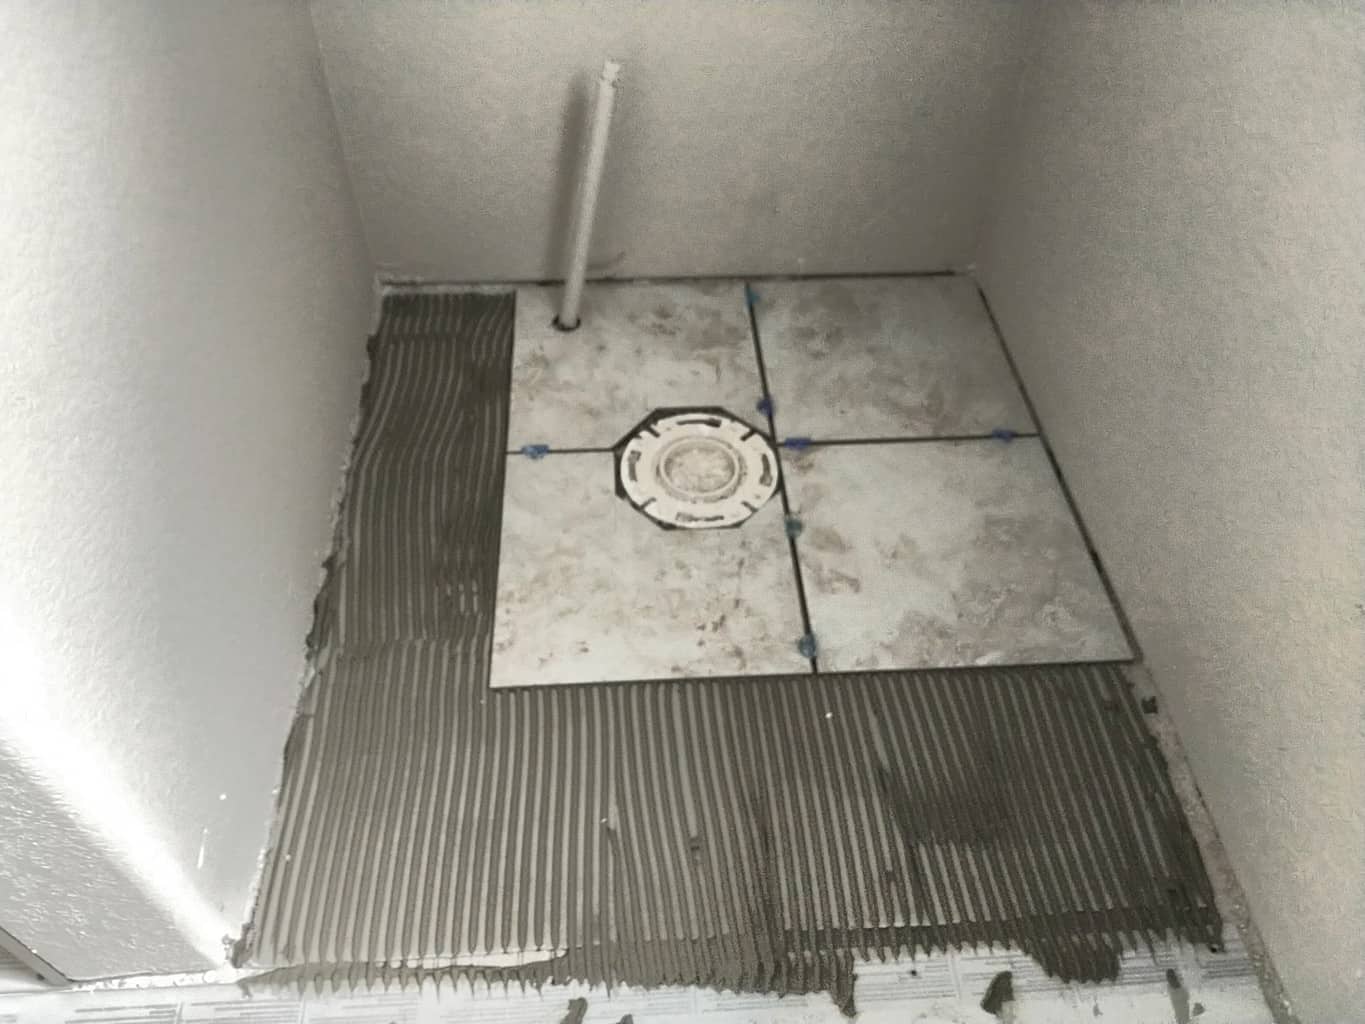 Tiles are installed around the toilet